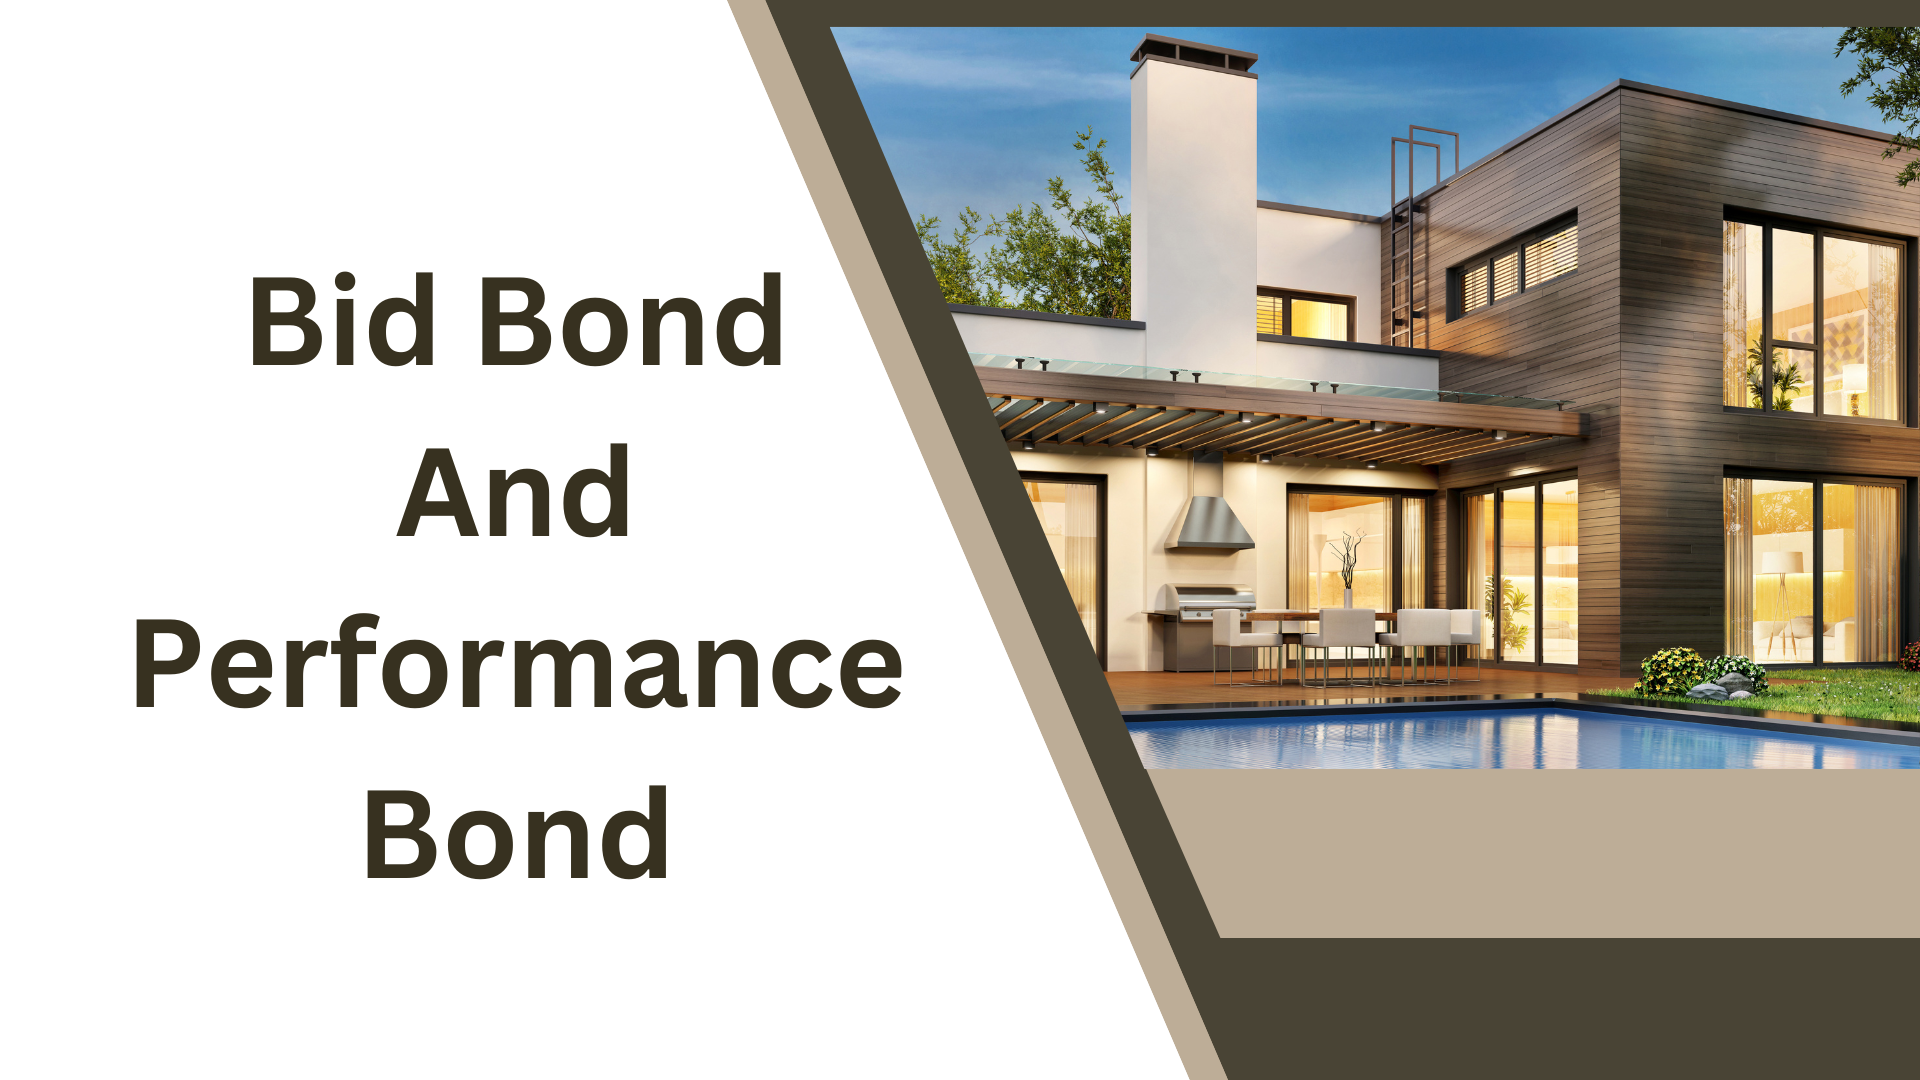 Bid Bond And Performance Bond